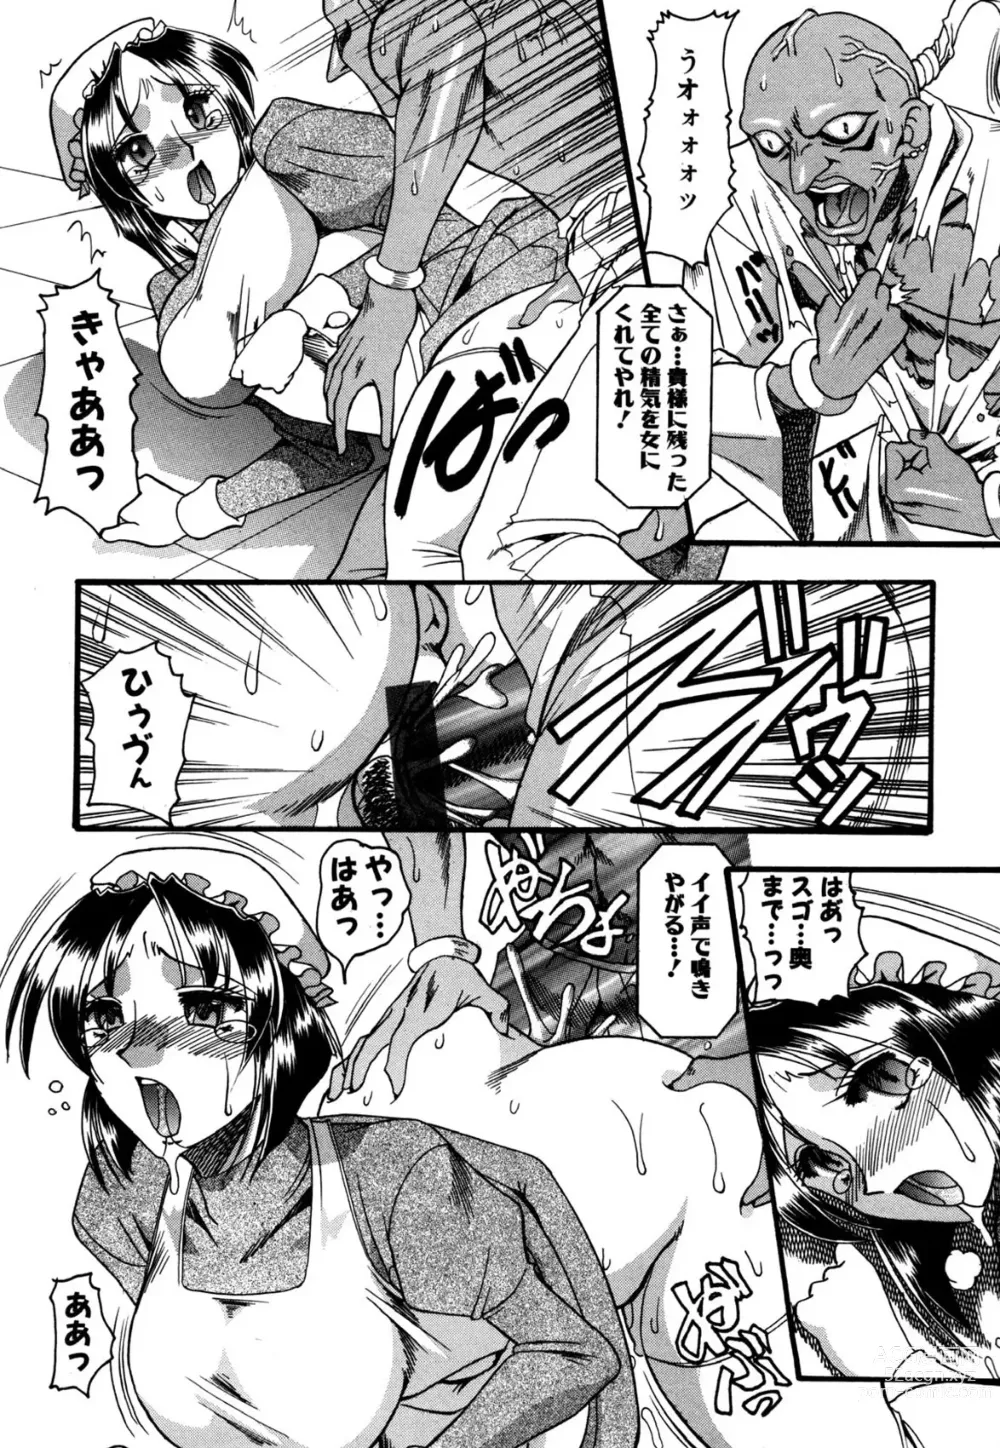 Page 17 of manga Mizugism